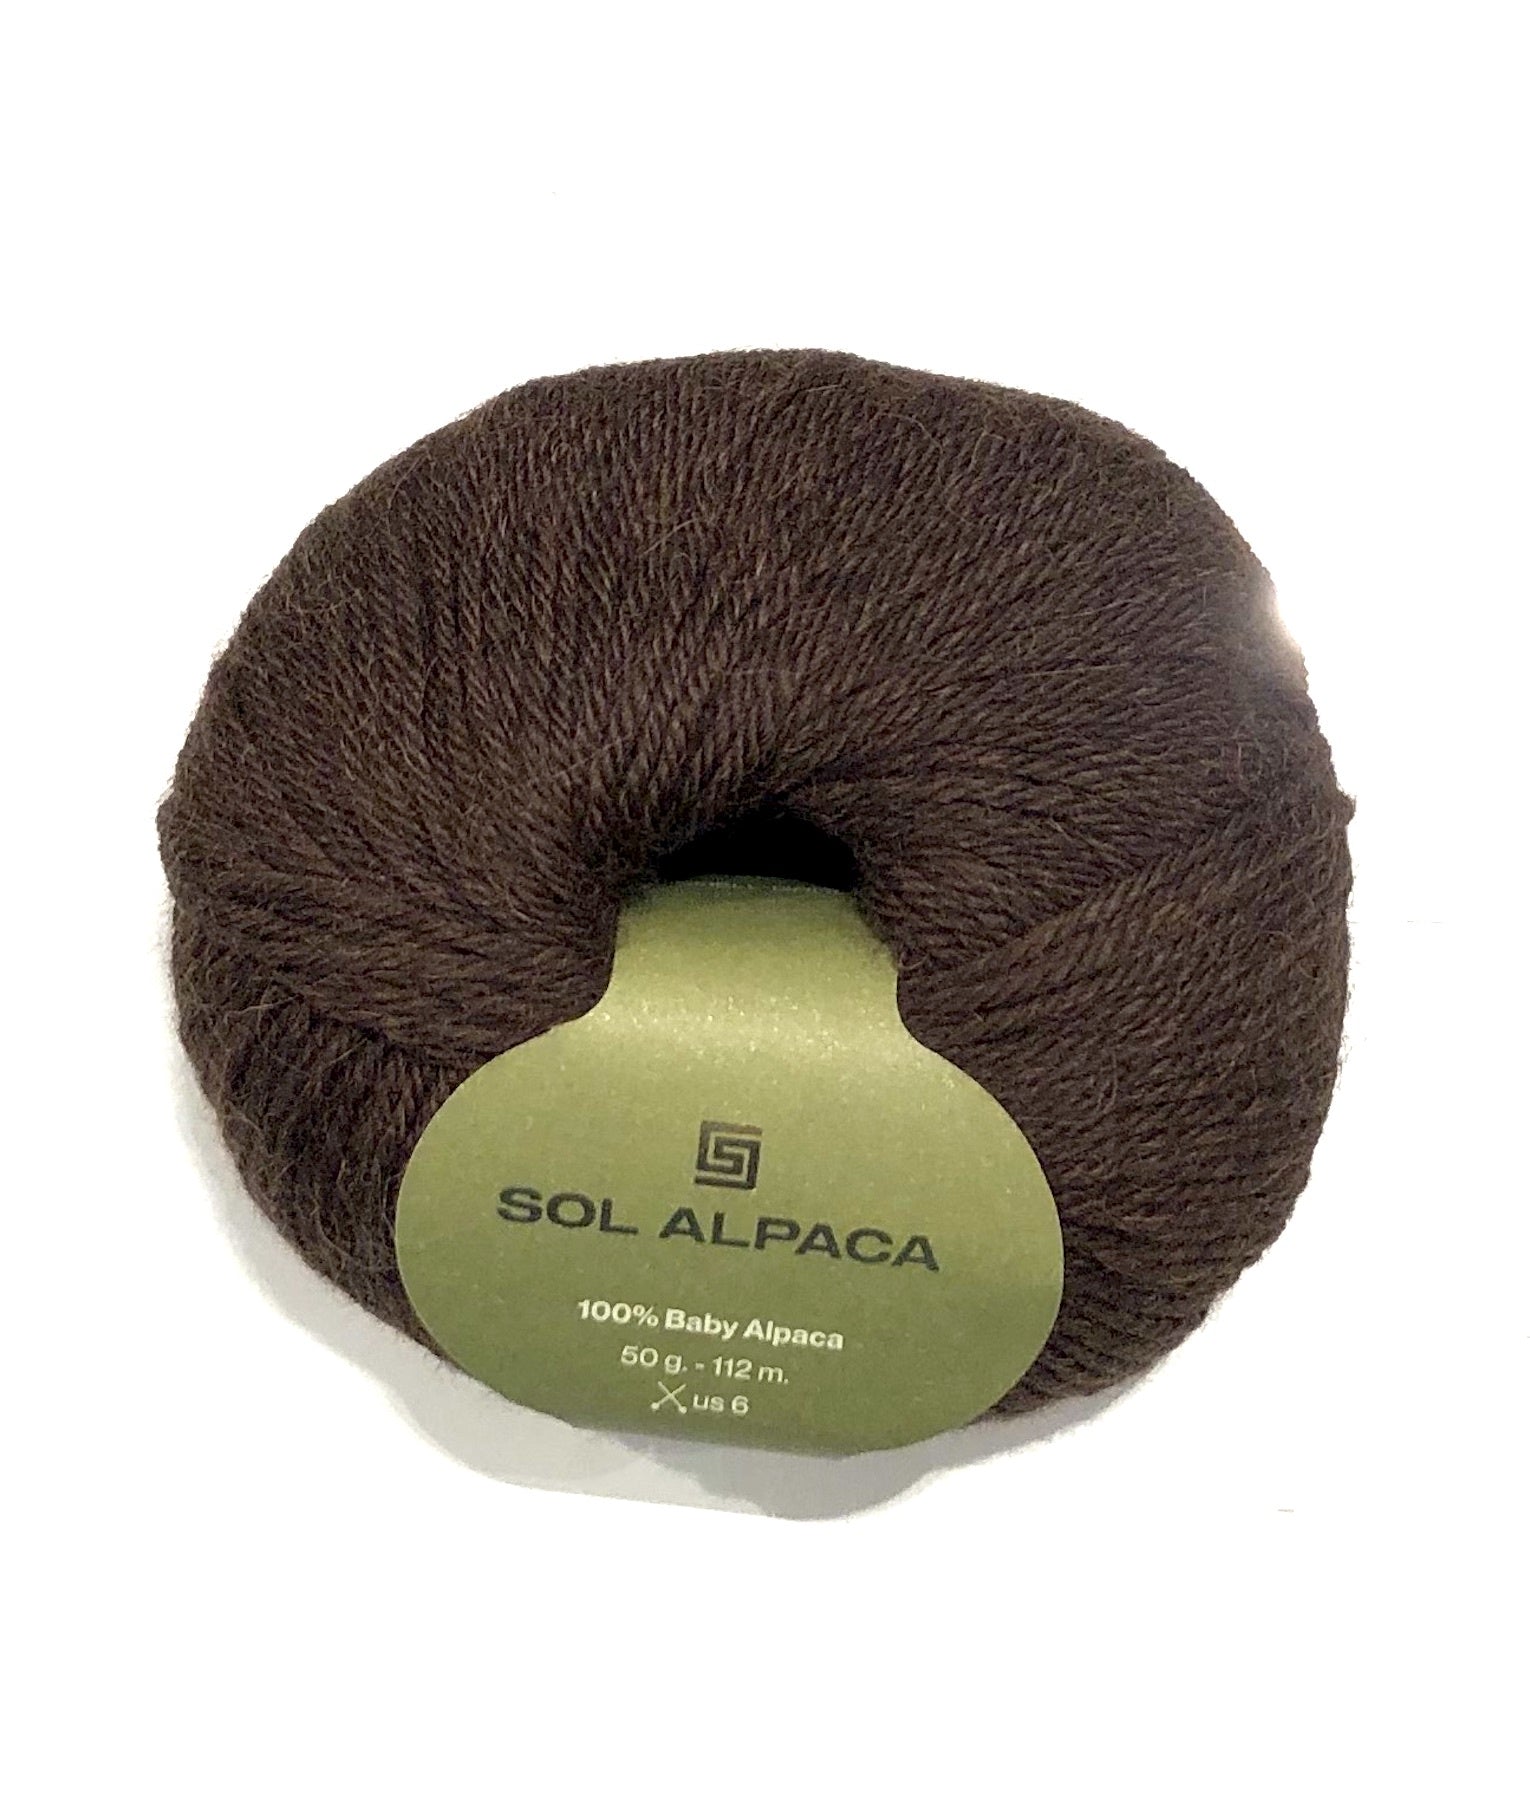 8-ply Baby Alpaca Yarn Ball 410 Chocolate